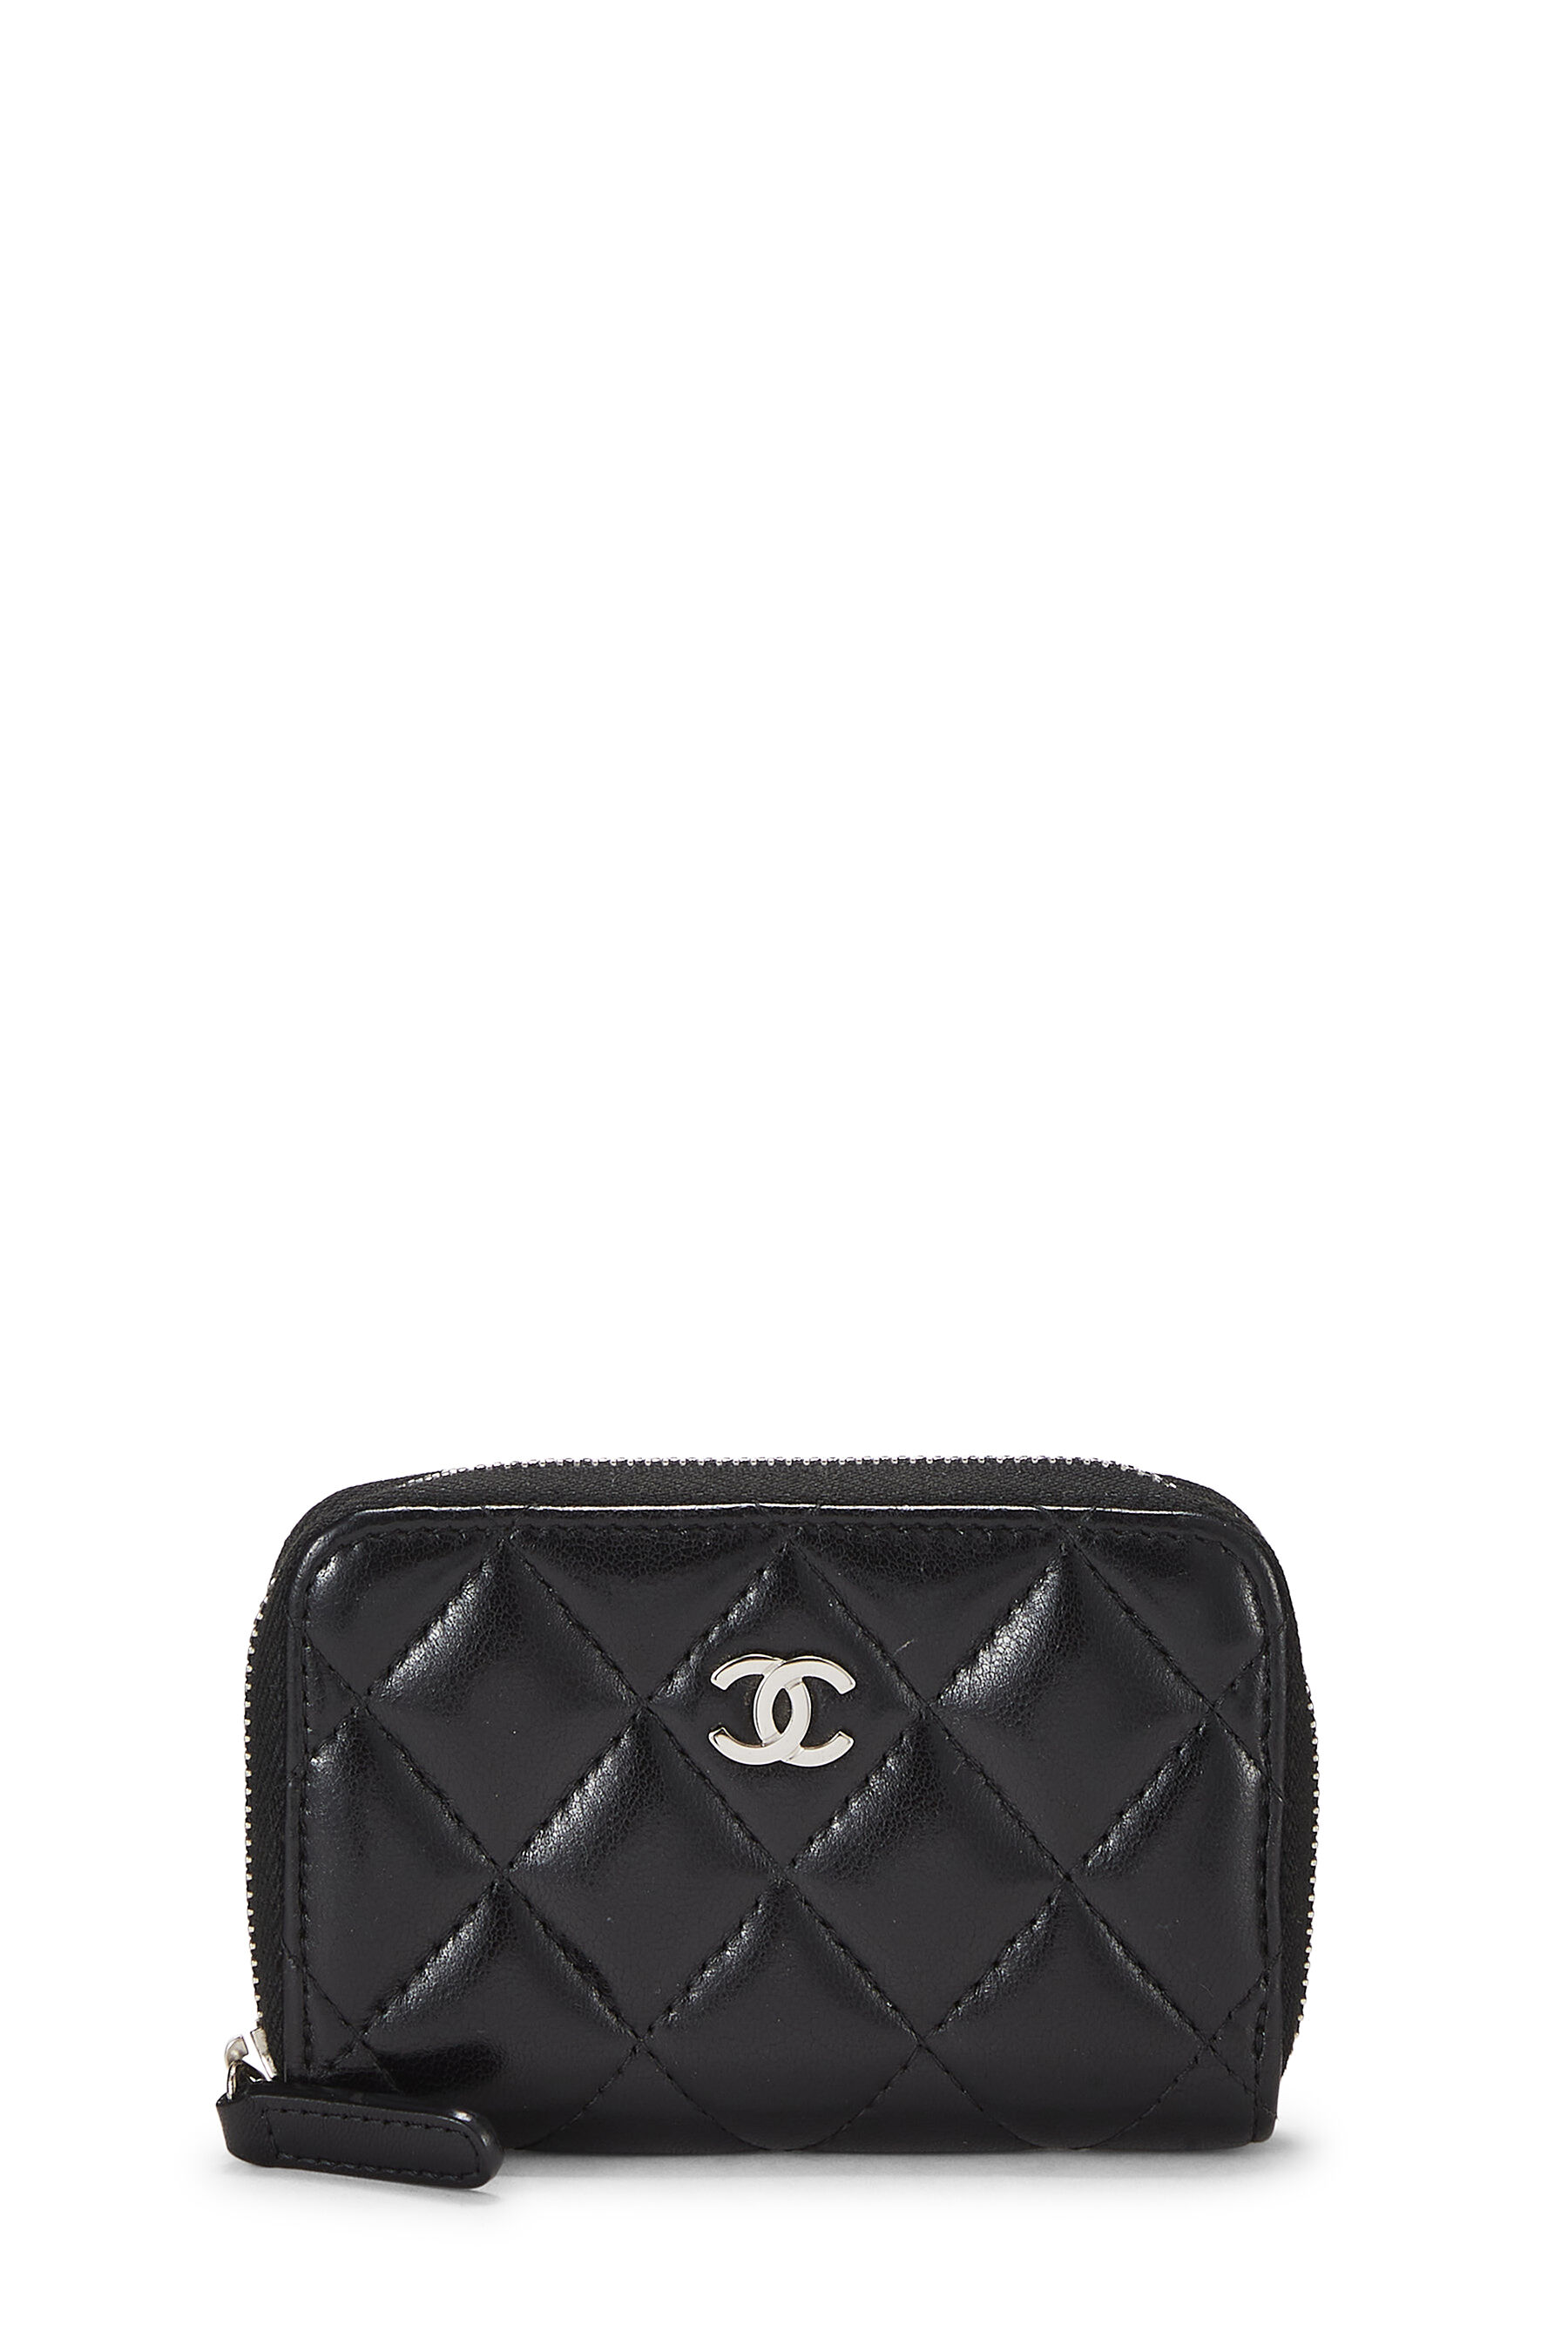 Chanel - Black Quilted Lambskin Zip Around Coin Purse